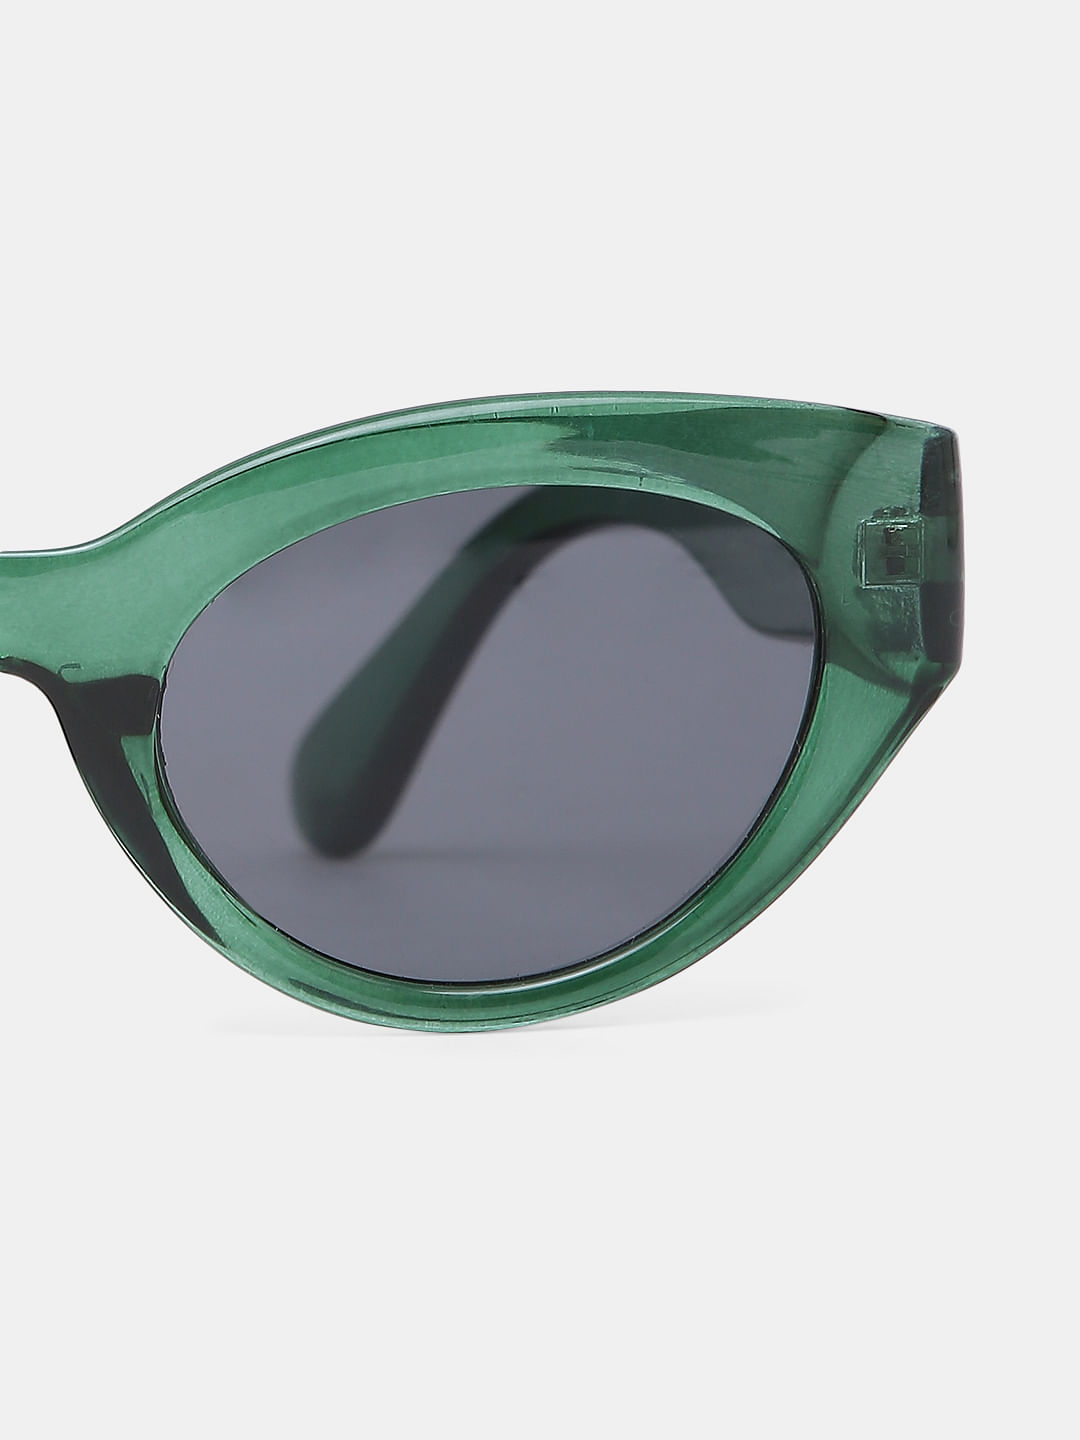 JORDANLUCA Readies Debut XP1 Sunglasses Drop | Hypebeast